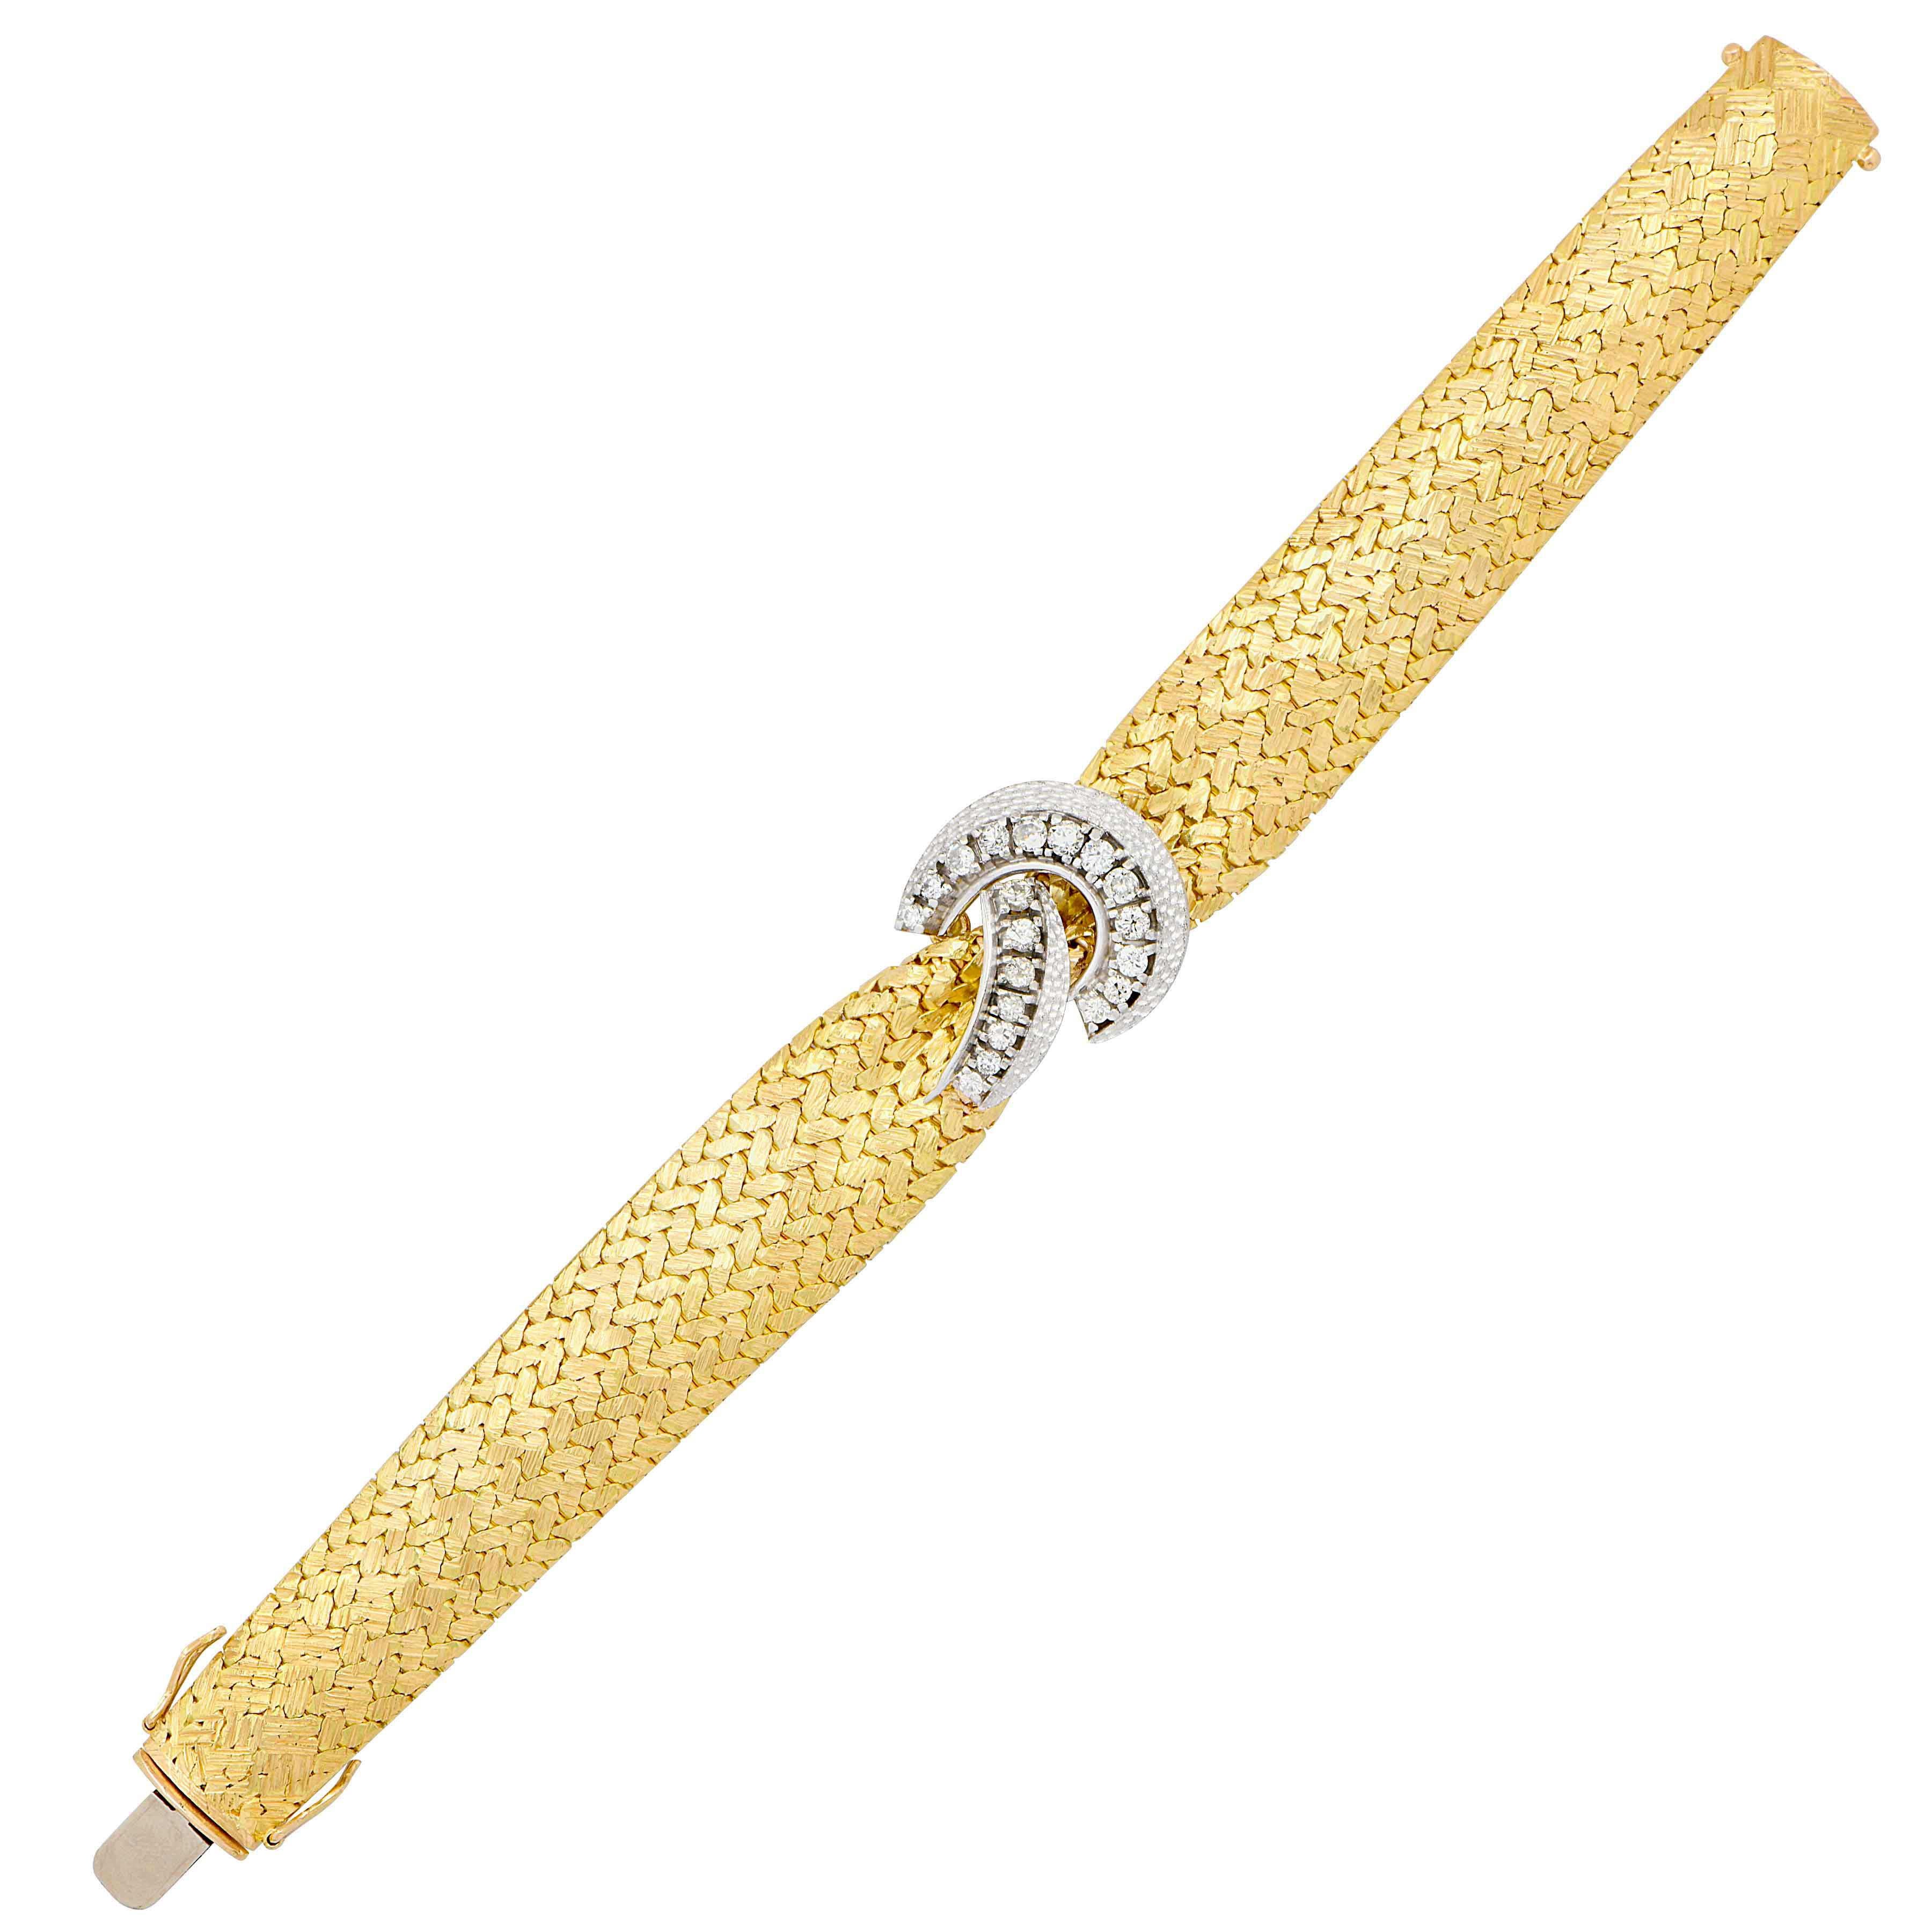 Retro Woven 18 Karat Yellow Gold Bracelet with Diamonds